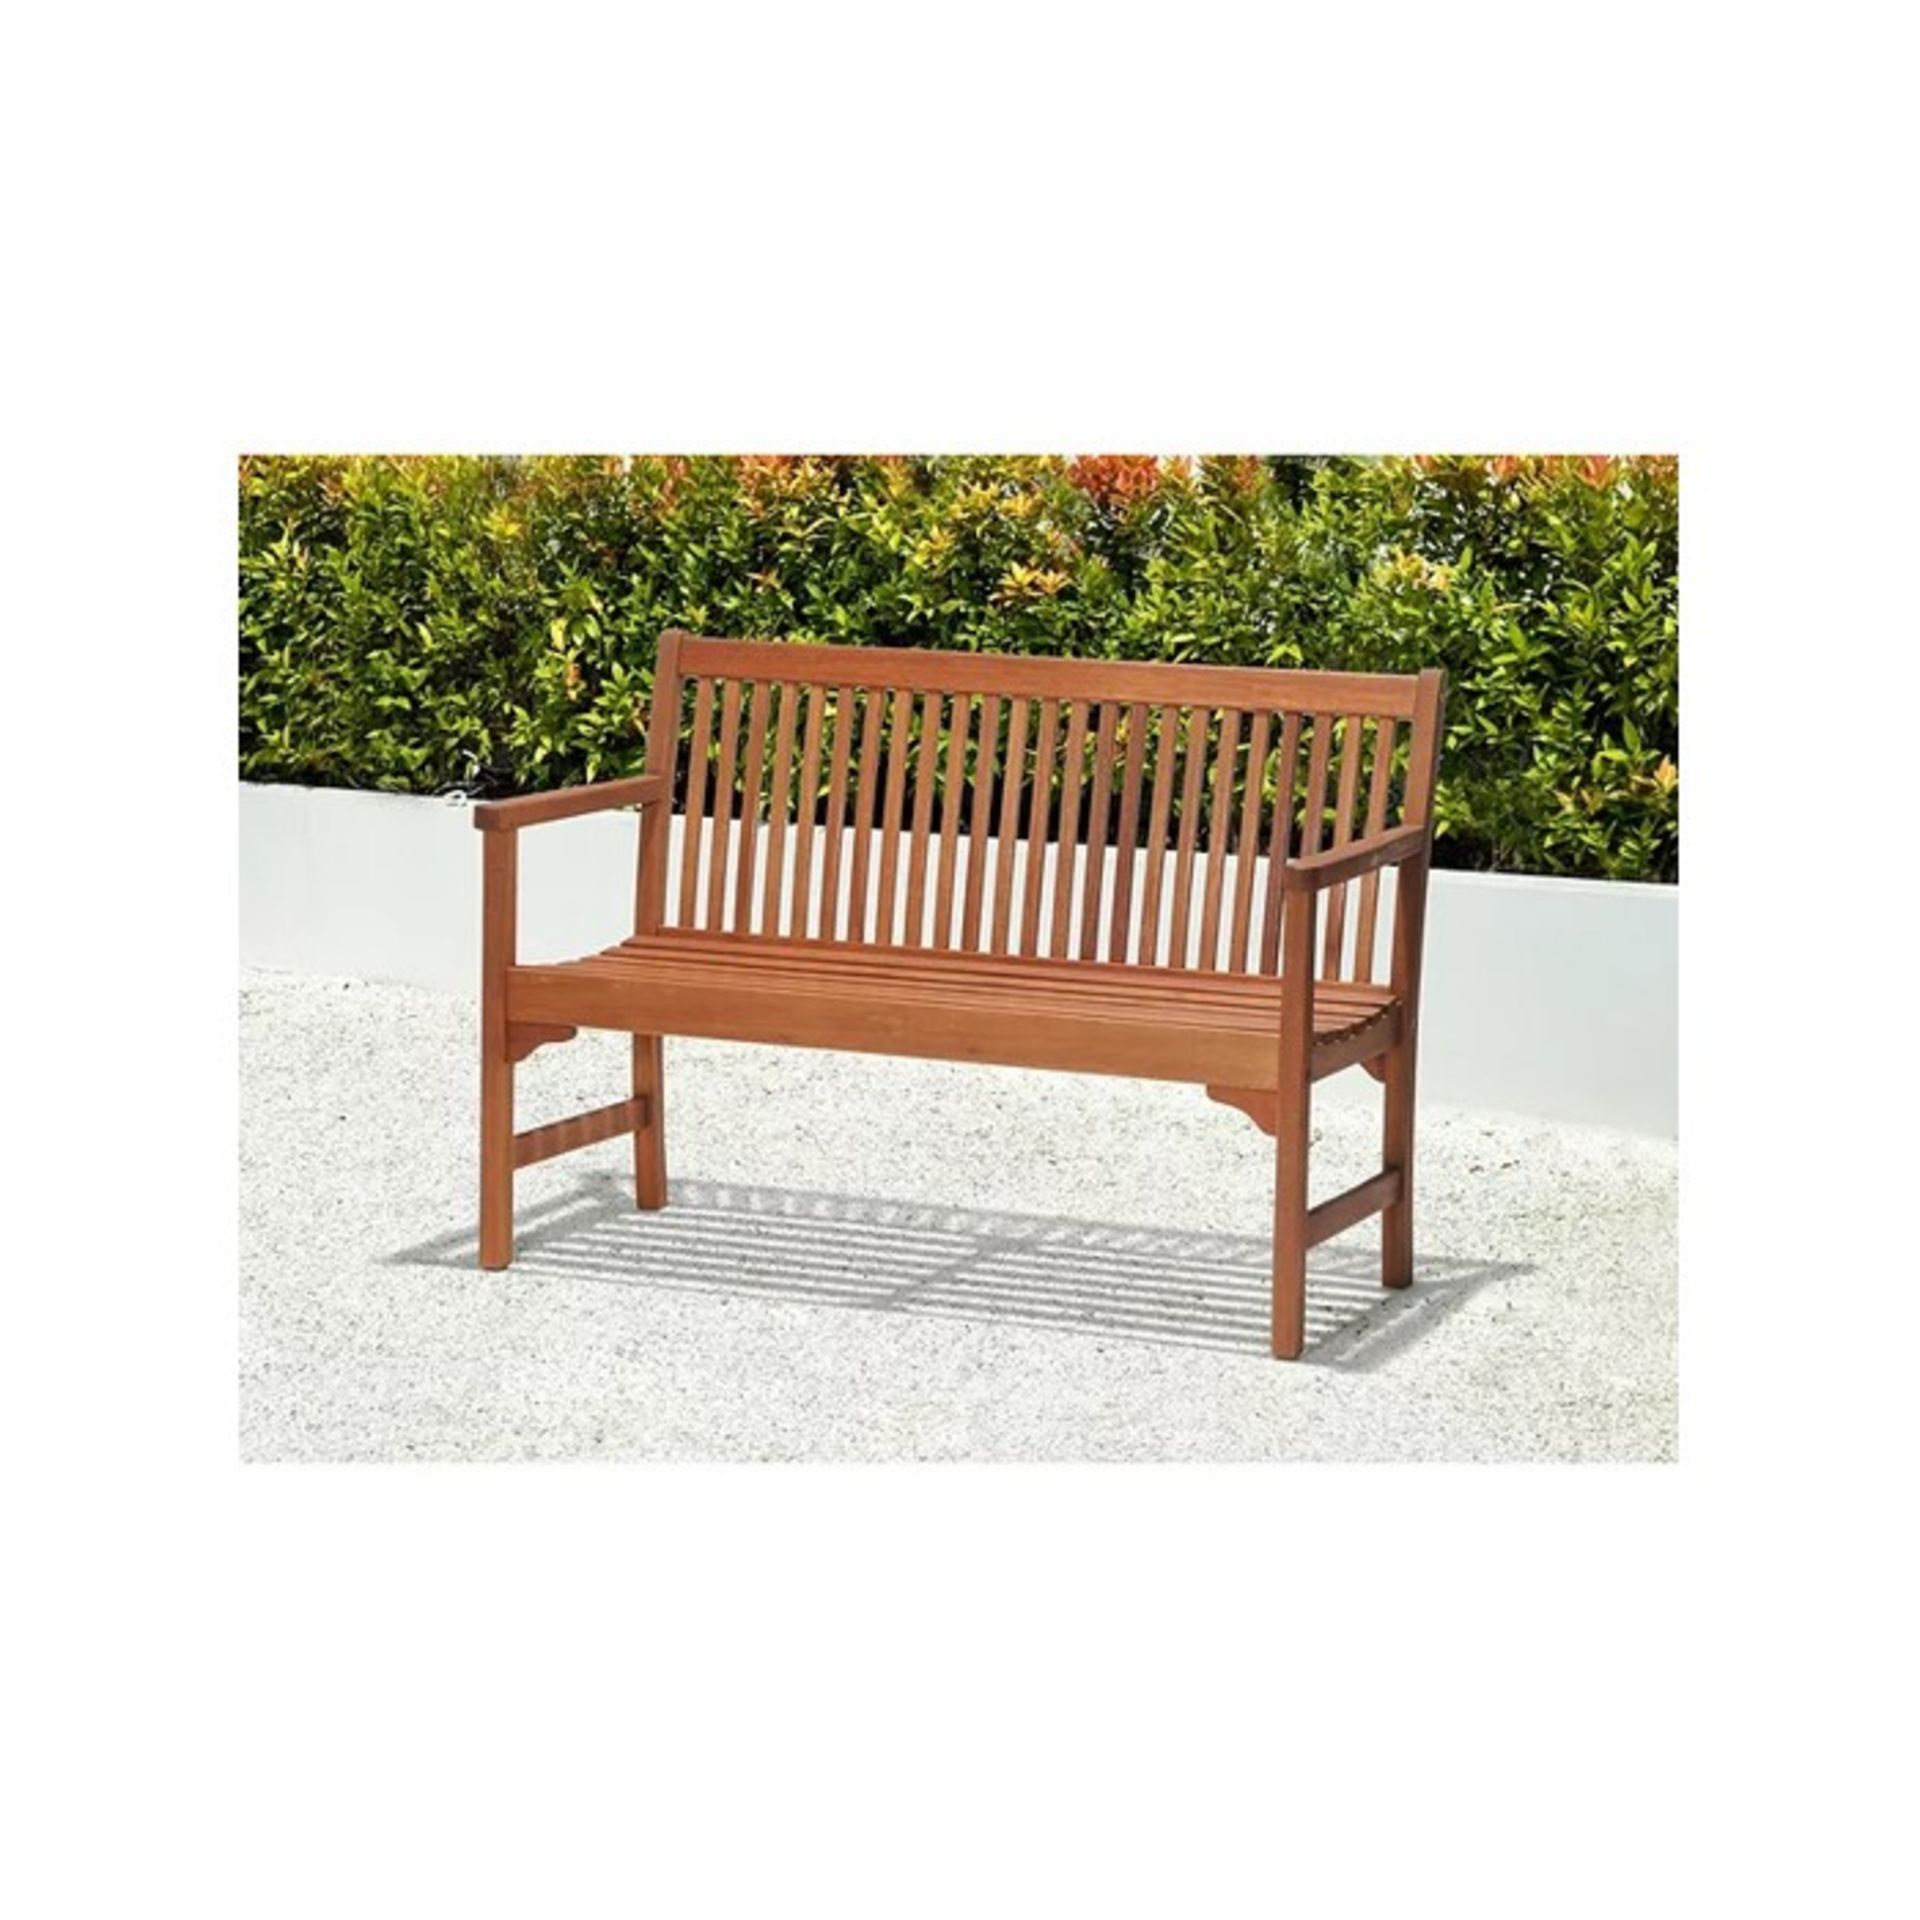 BRAND NEW JOHN LEWIS 2-Seater Garden Bench, FSC-Certified (Eucalyptus Wood), Natural. RRP £253.50. - Image 2 of 4